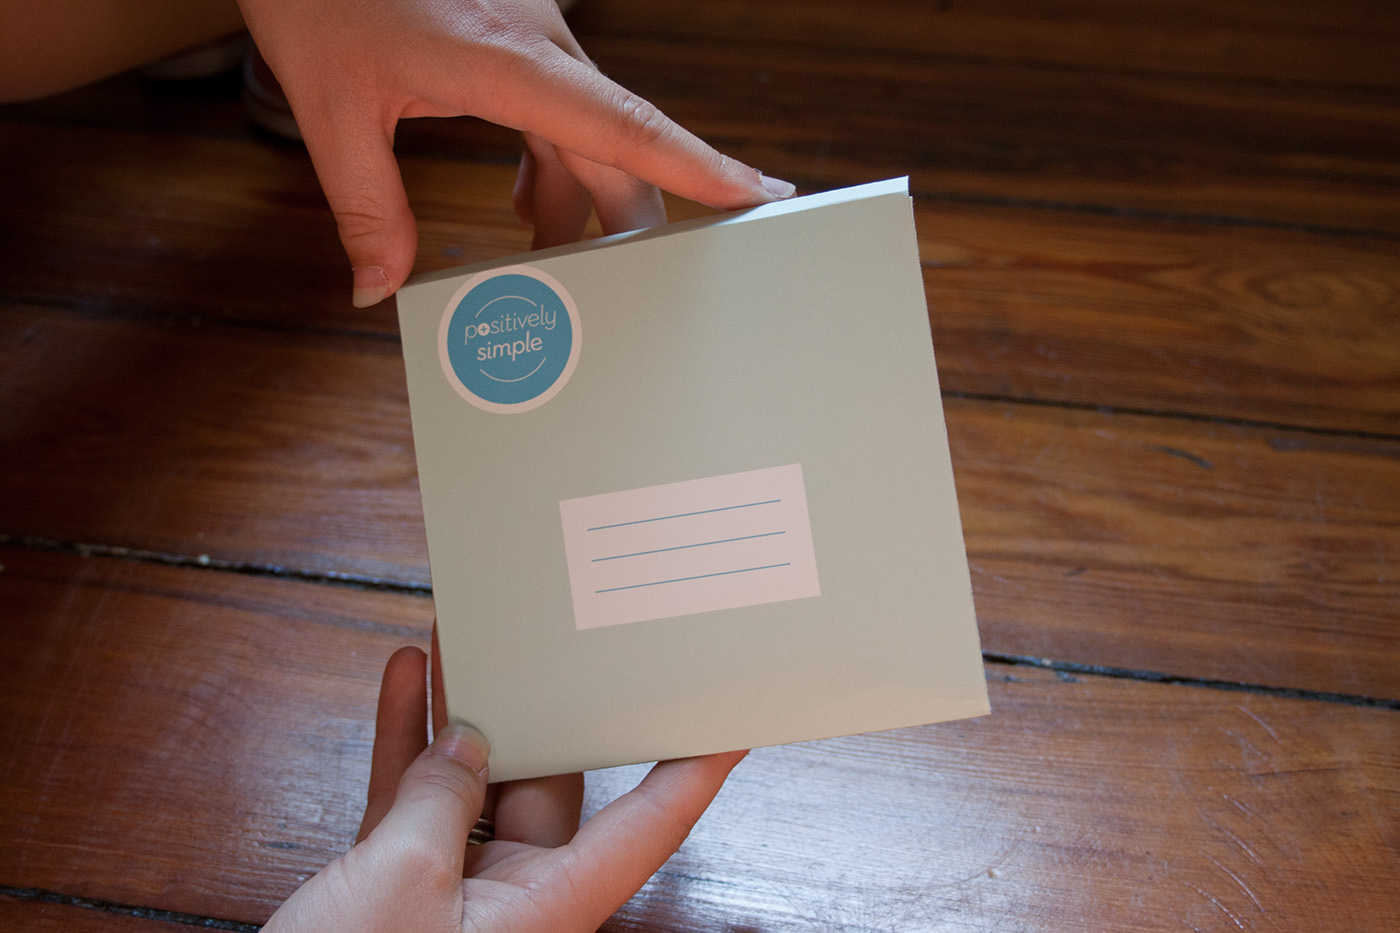 positively simple simple simplify Direct Mail Kit non-profit de-clutter material possessions